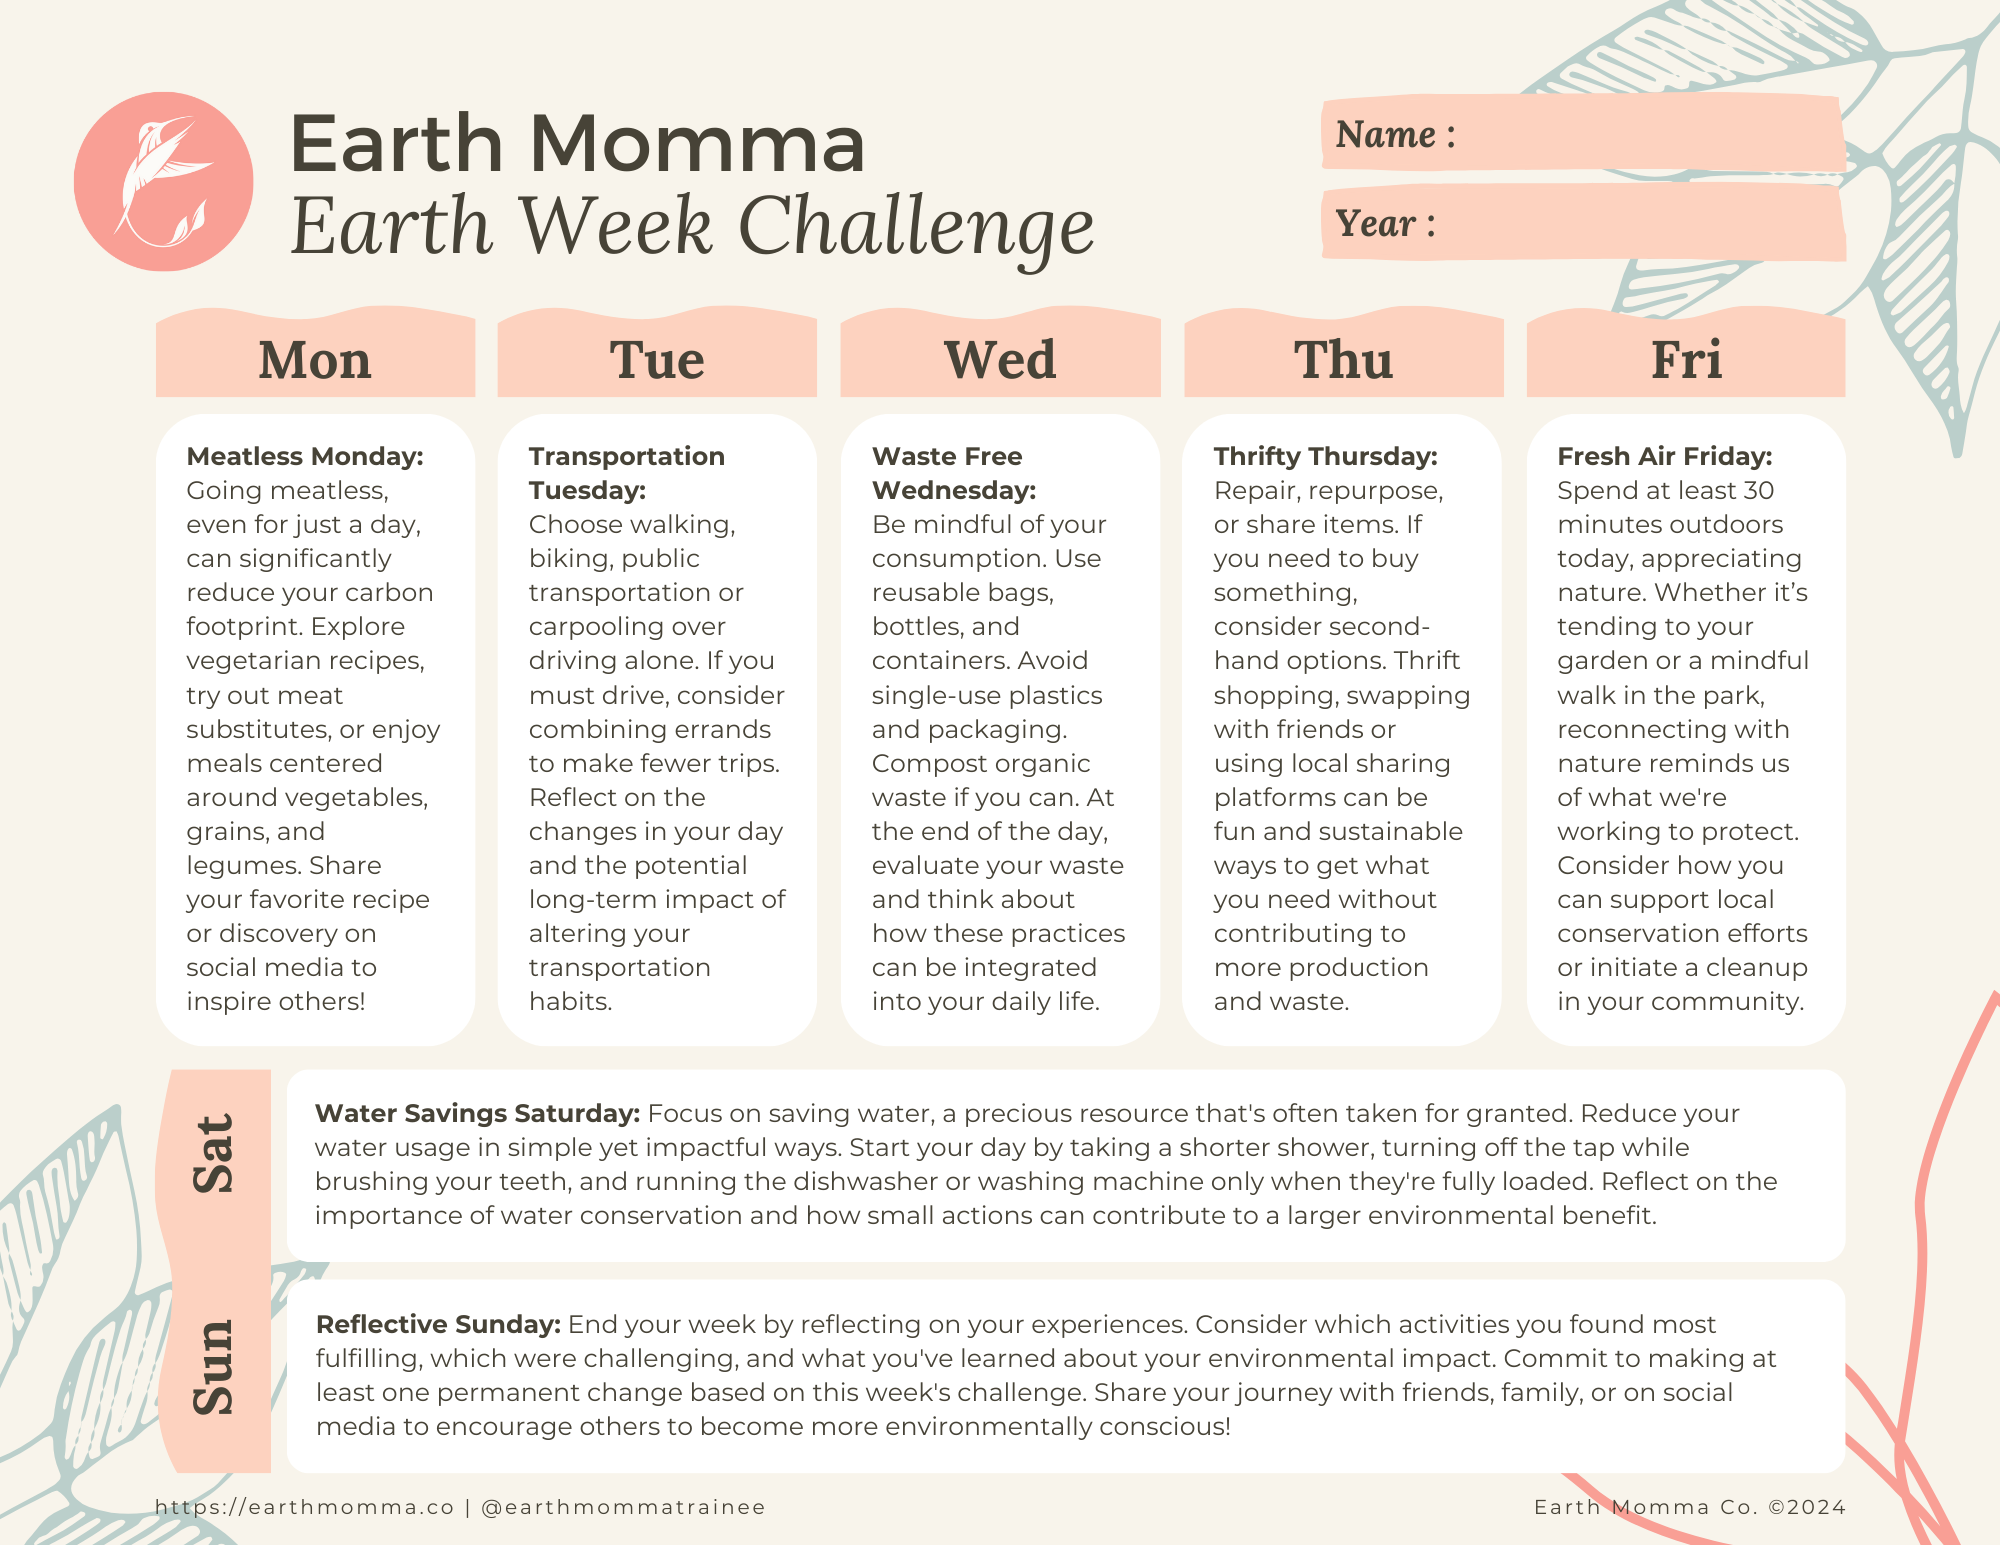 Earth Week Challenge: Making Every Day Greener